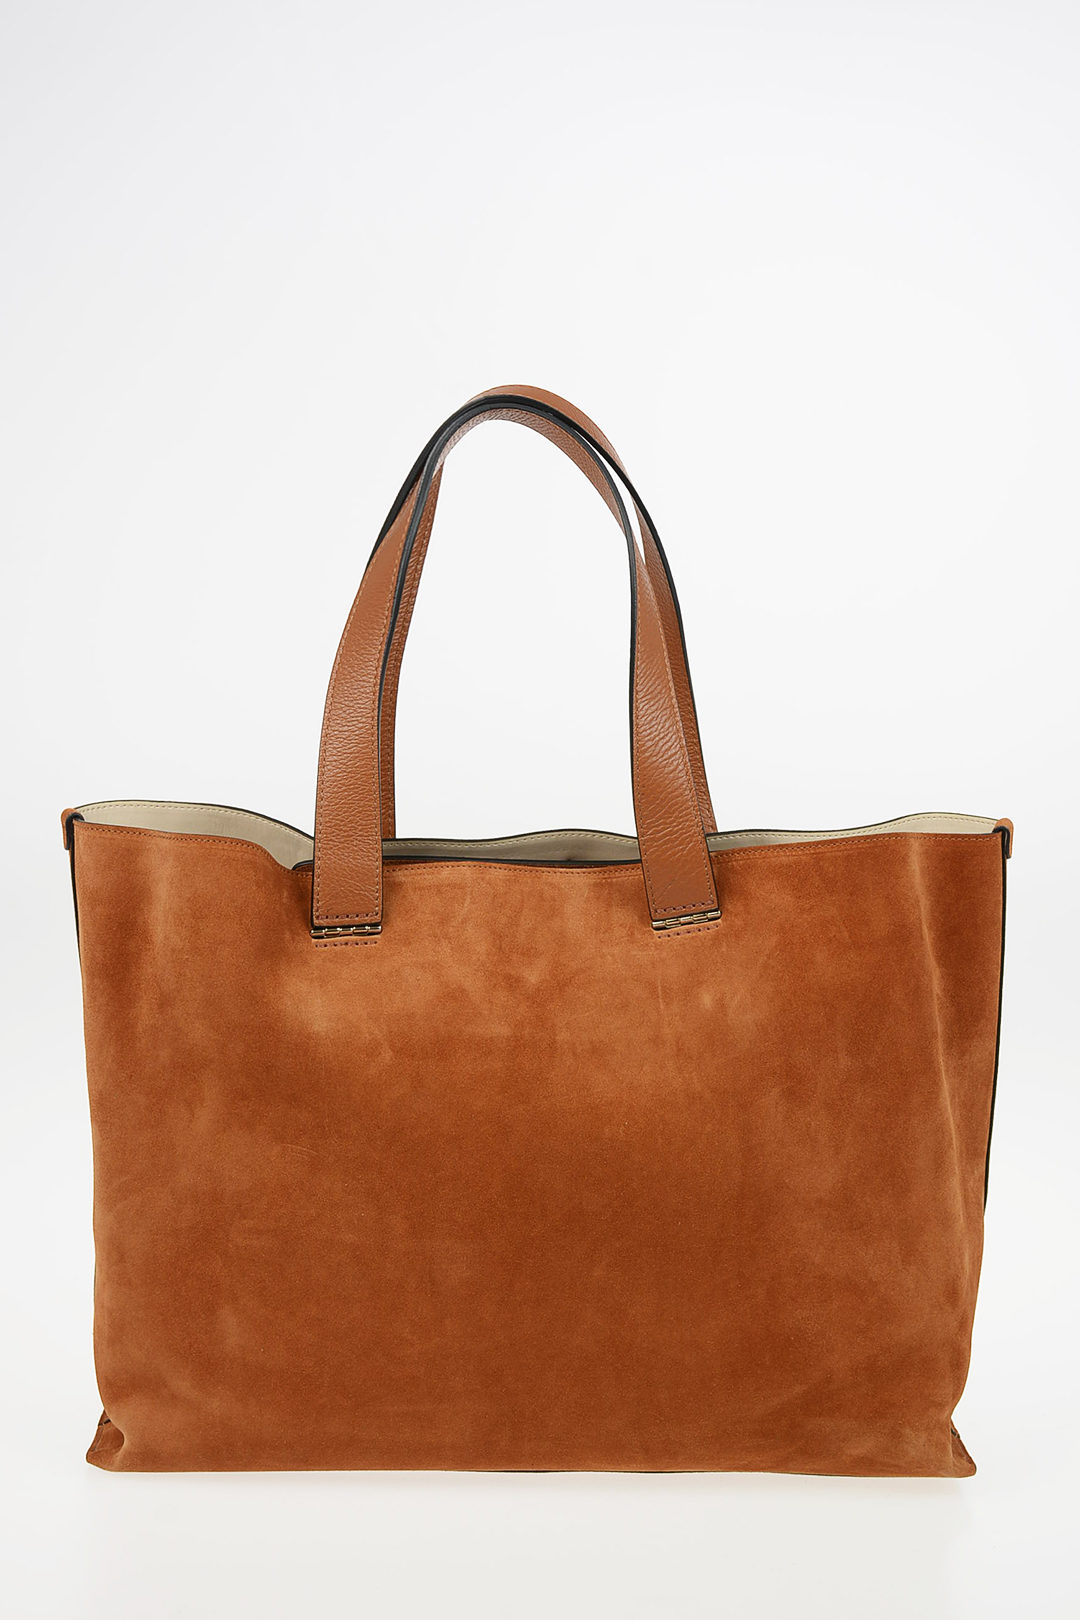 Giorgio Armani Small Pebble Leather Tote Bag | Neiman Marcus